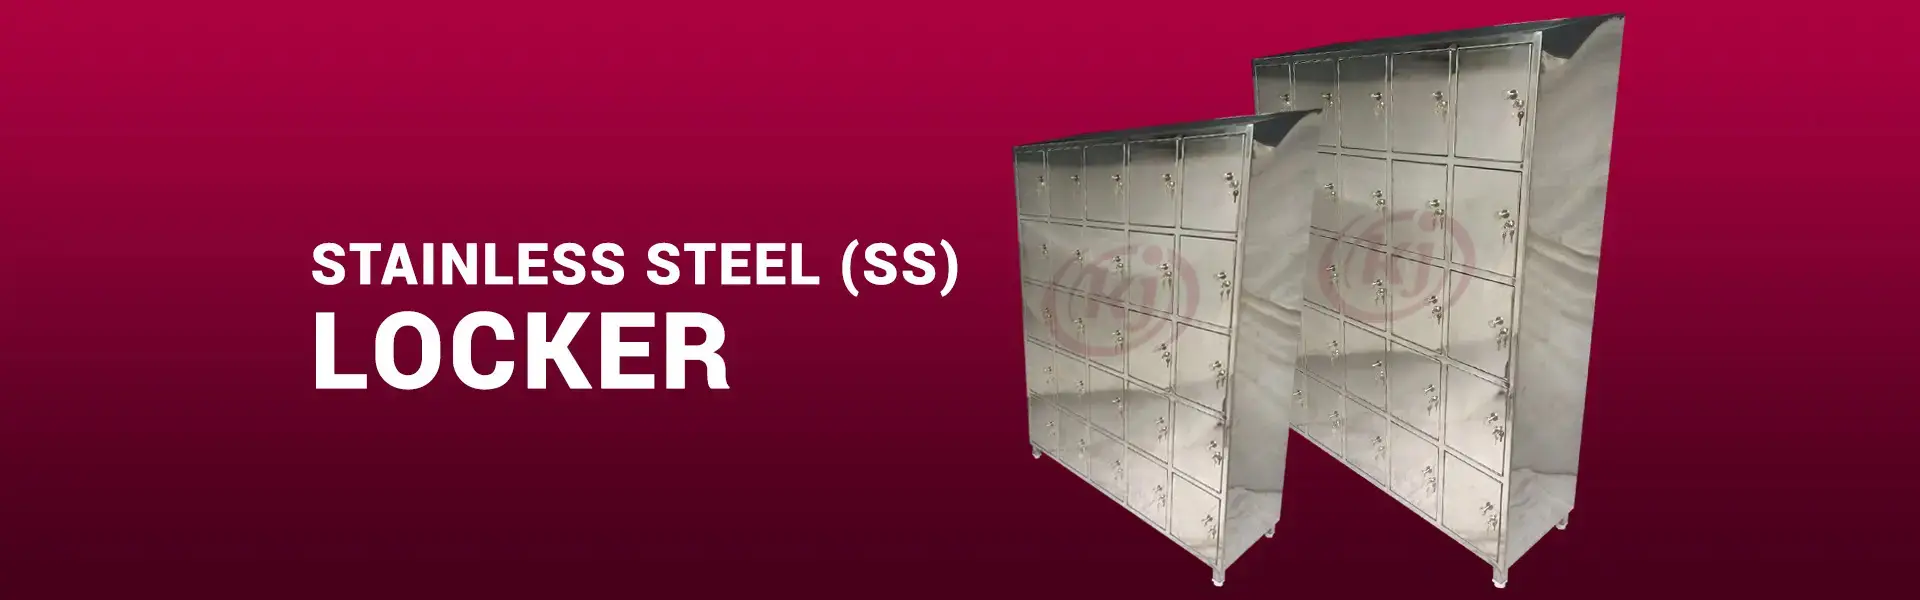 Stainless Steel Rack - SS Rack Manufacturer